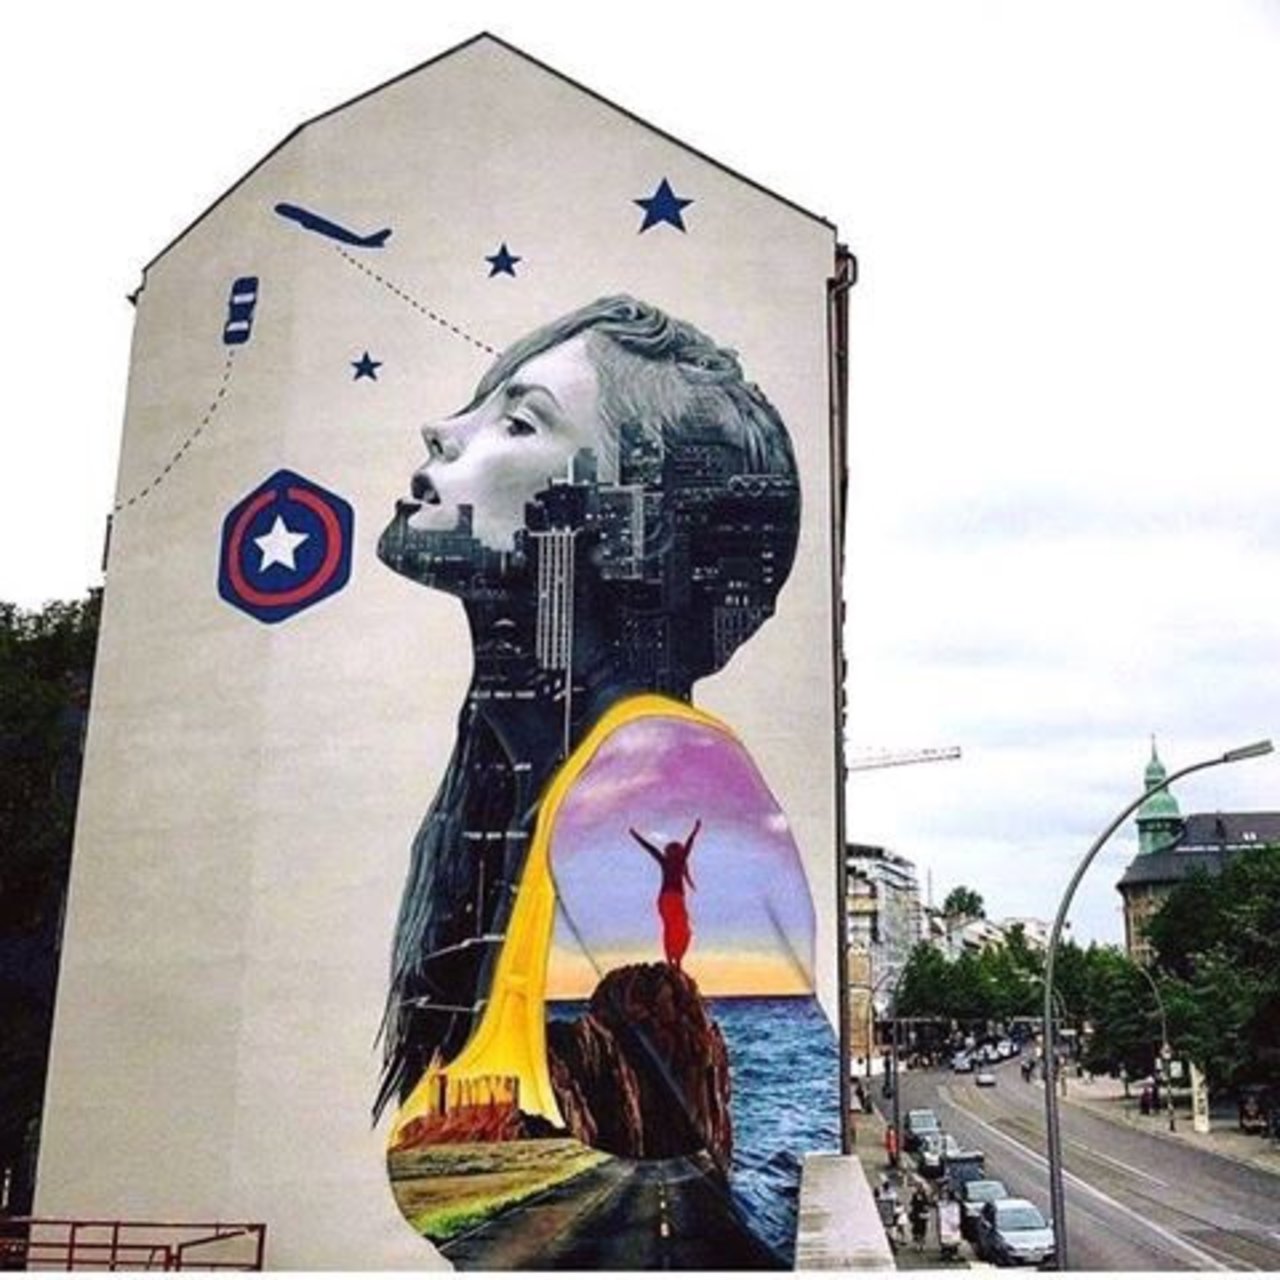 #mural By Royal TS #berlin #Germany #art #streetart #graffiti #urbanart https://t.co/deSVQSltD0